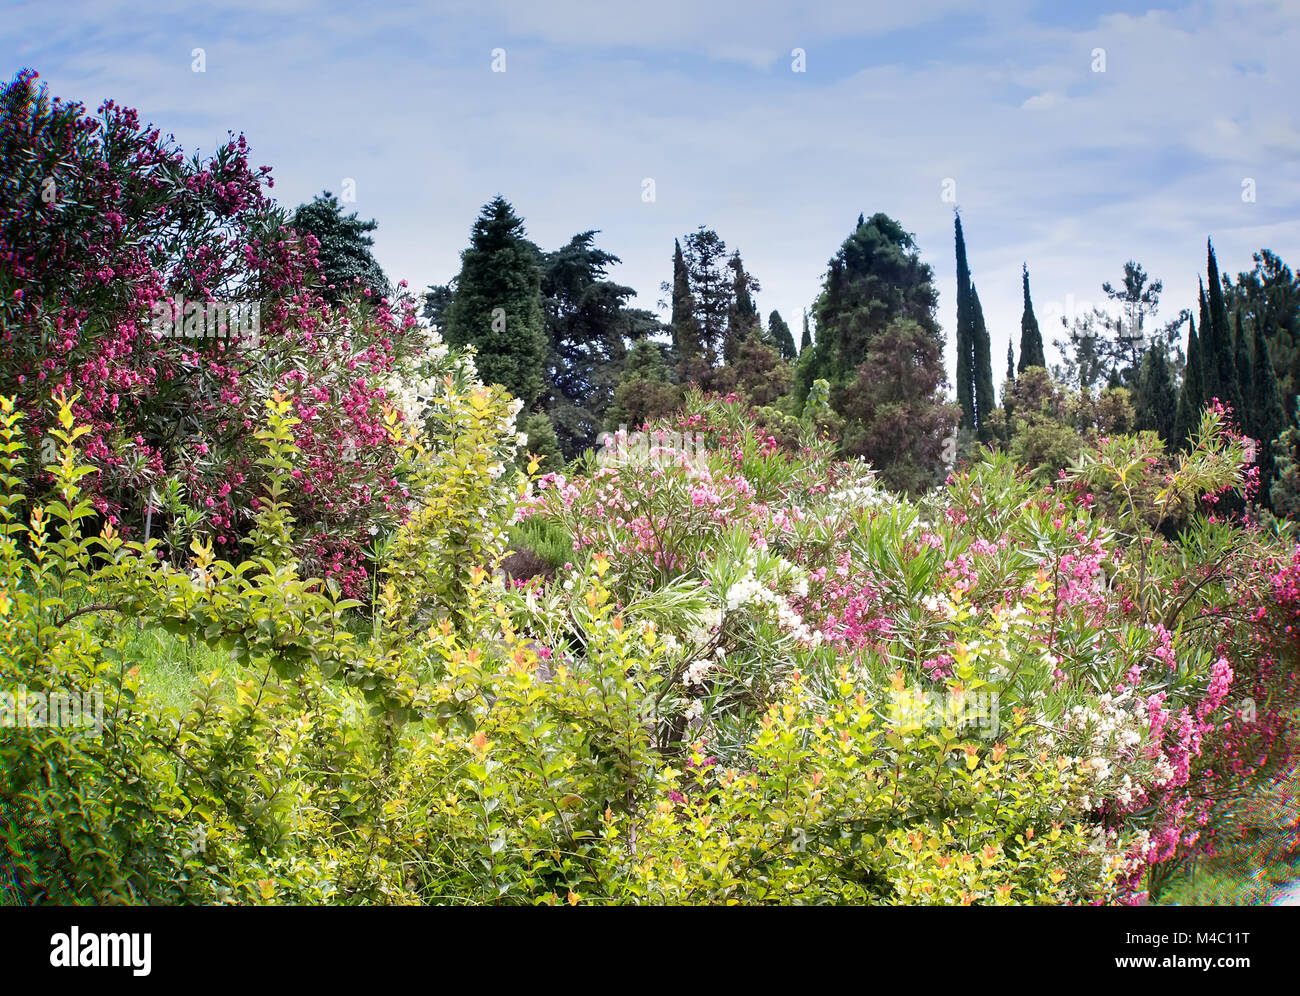 In the arboretum the flowering bushes of oleander. Stock Photo